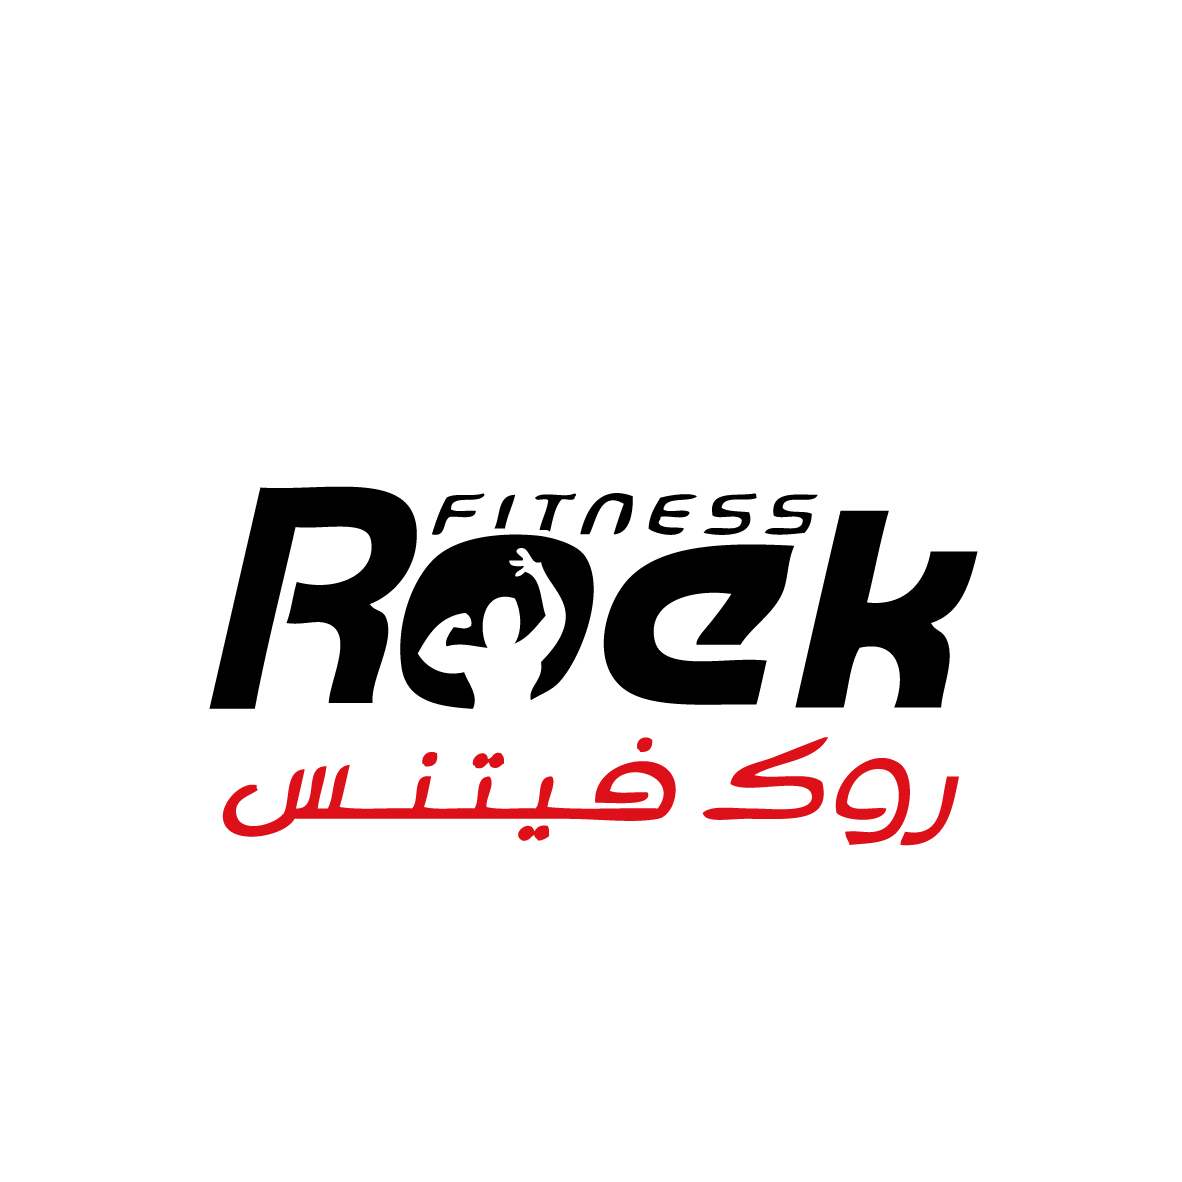 Rock fitness